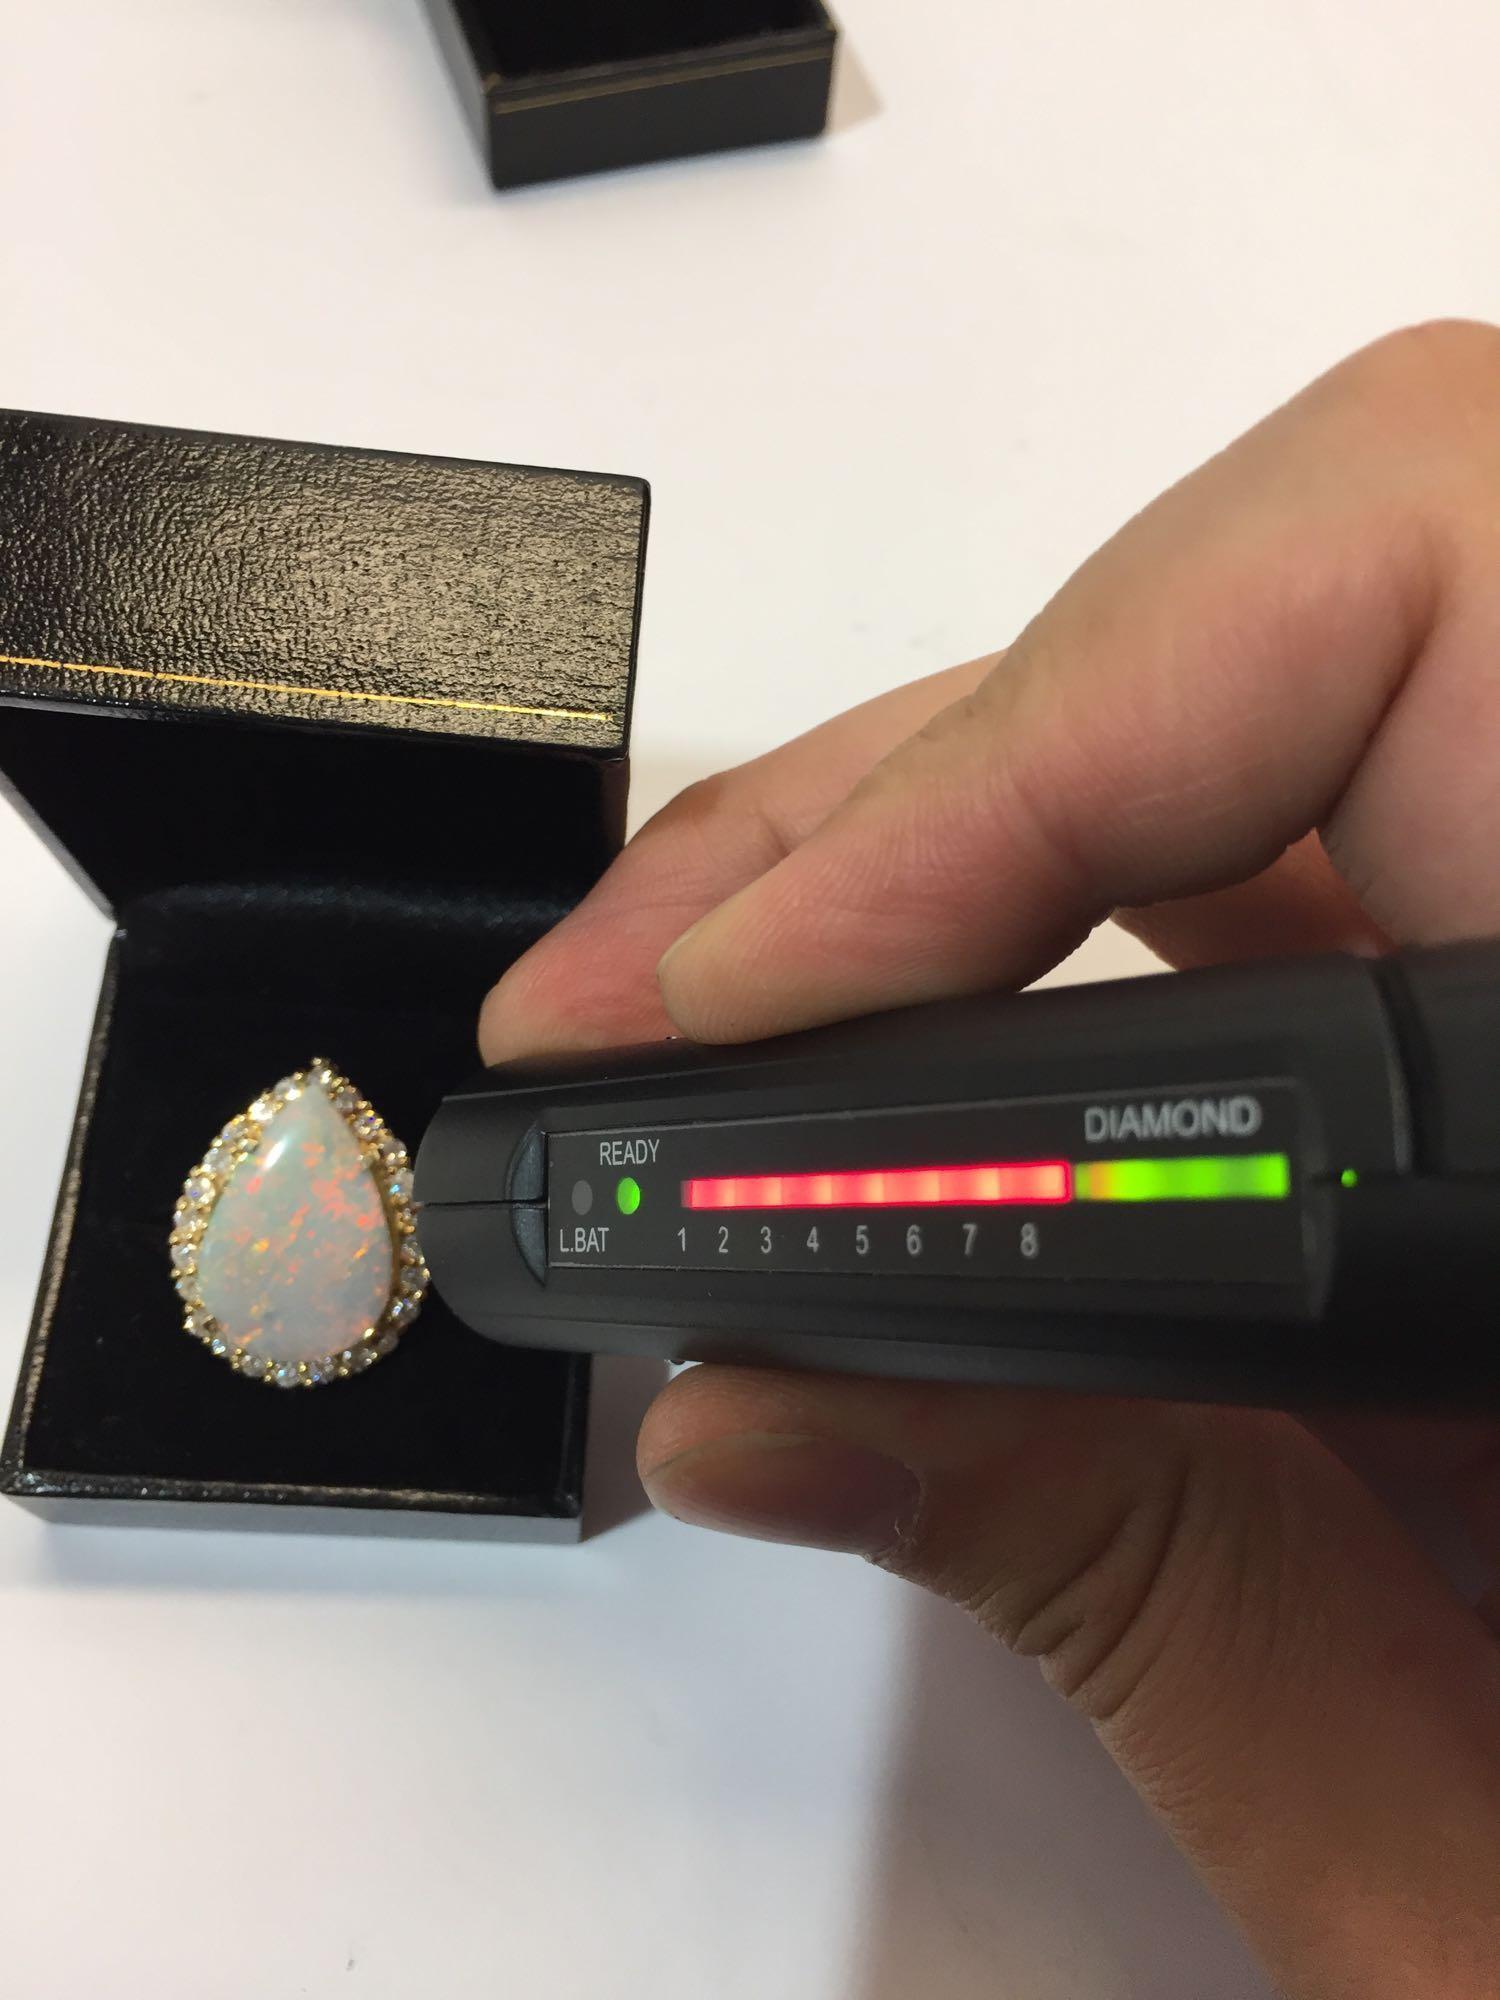 14K Gold 7.25 carat Opal & 1.05 carats Diamond Ring with AIGL Certificate size 6